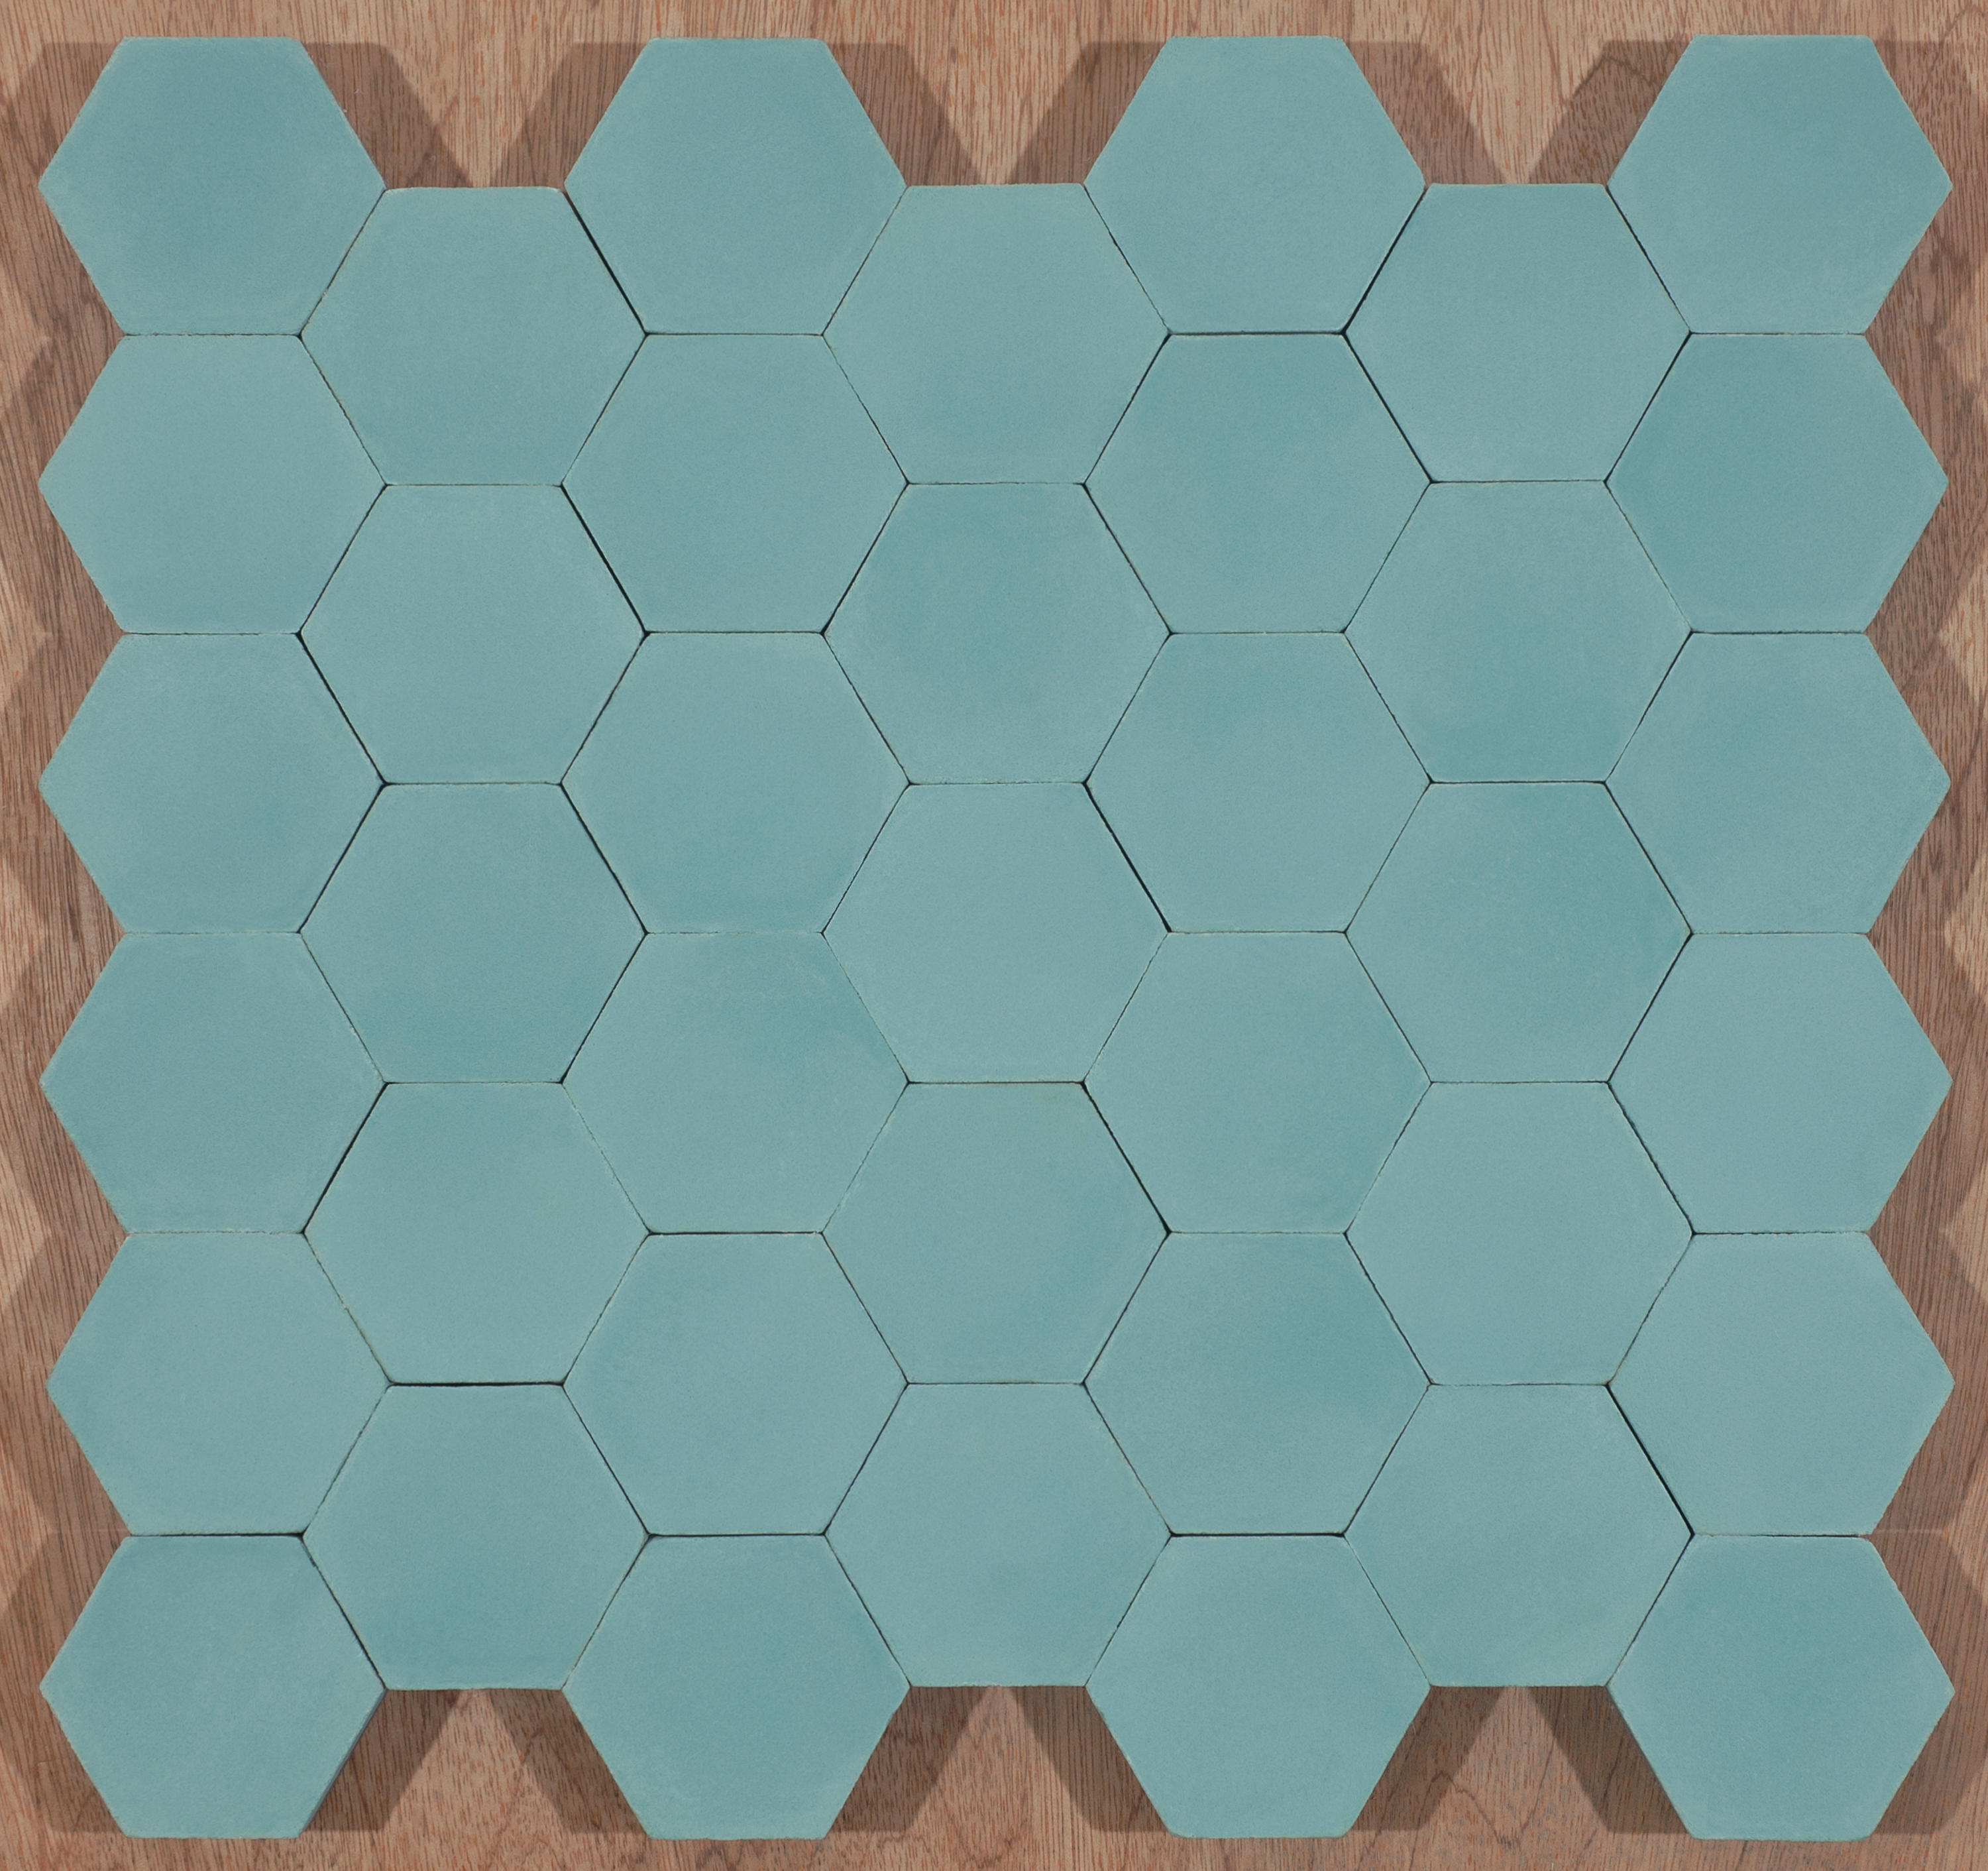 Hexagon Aqua Beton Fliesen Von Granada Tile Architonic